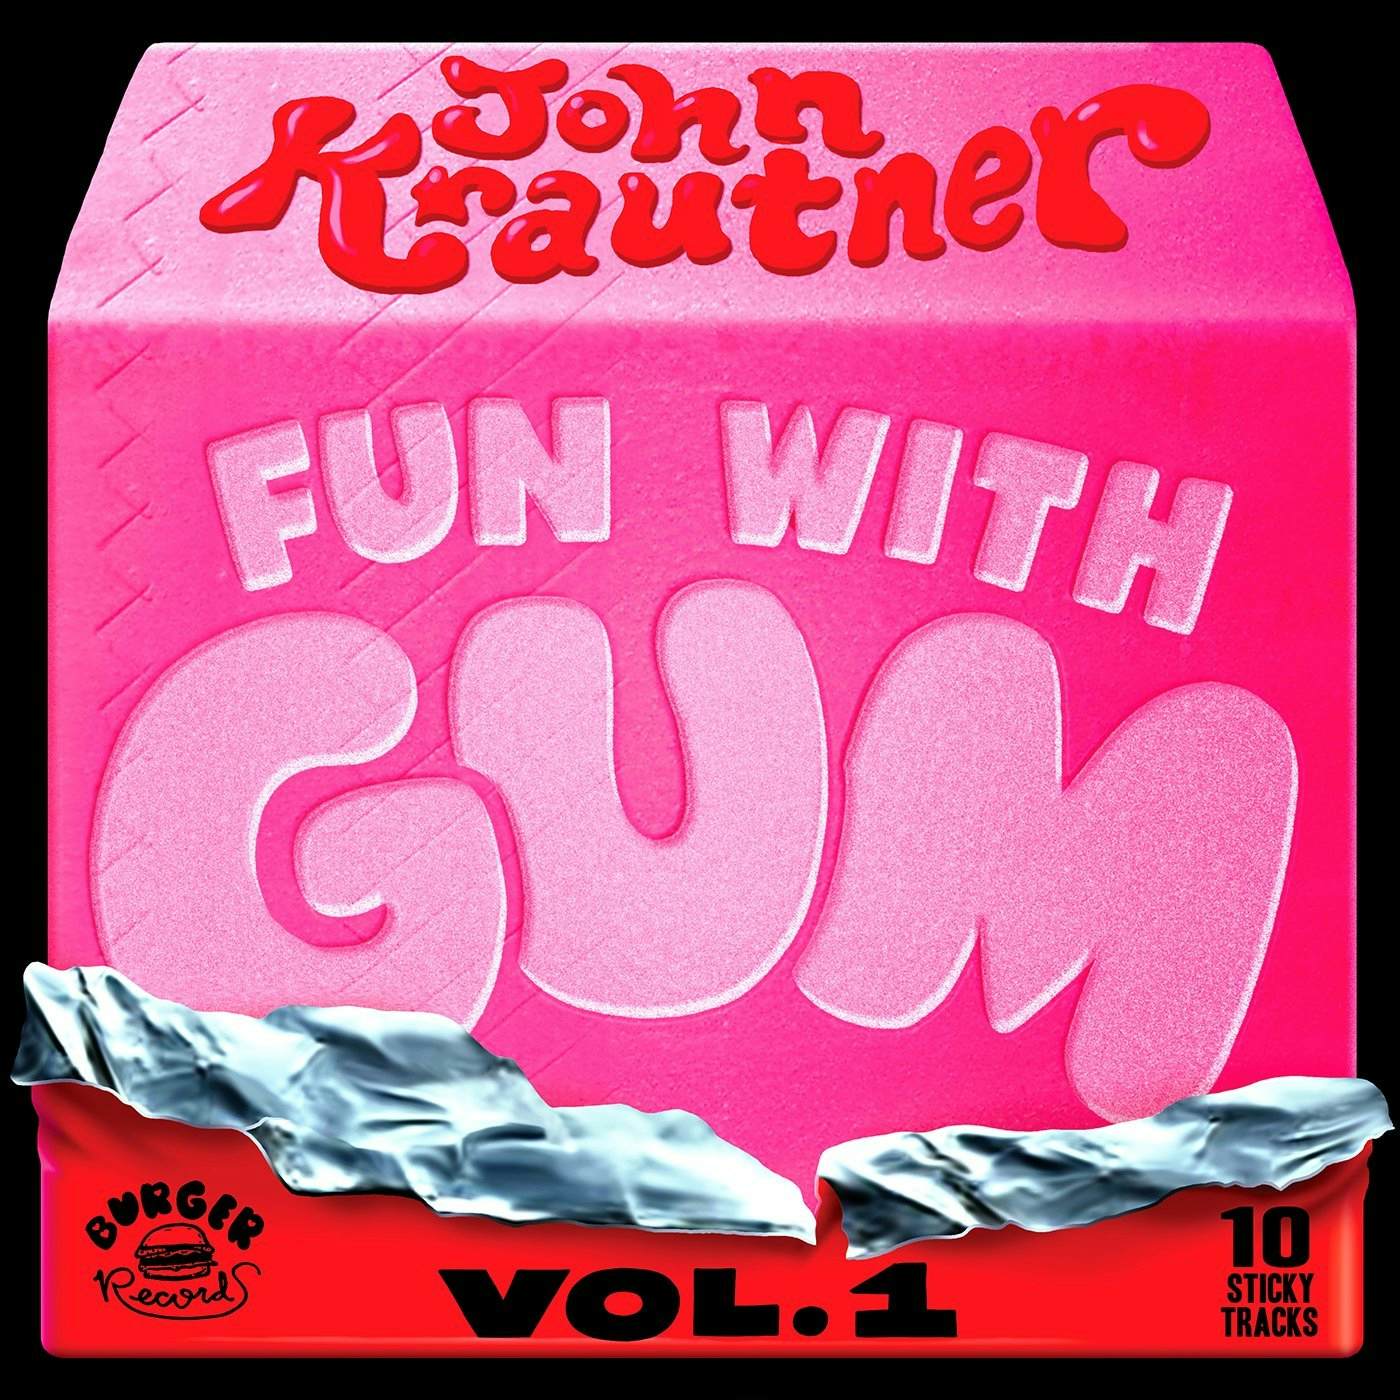 John Krautner FUN WITH GUM 1 Vinyl Record - Digital Download Included